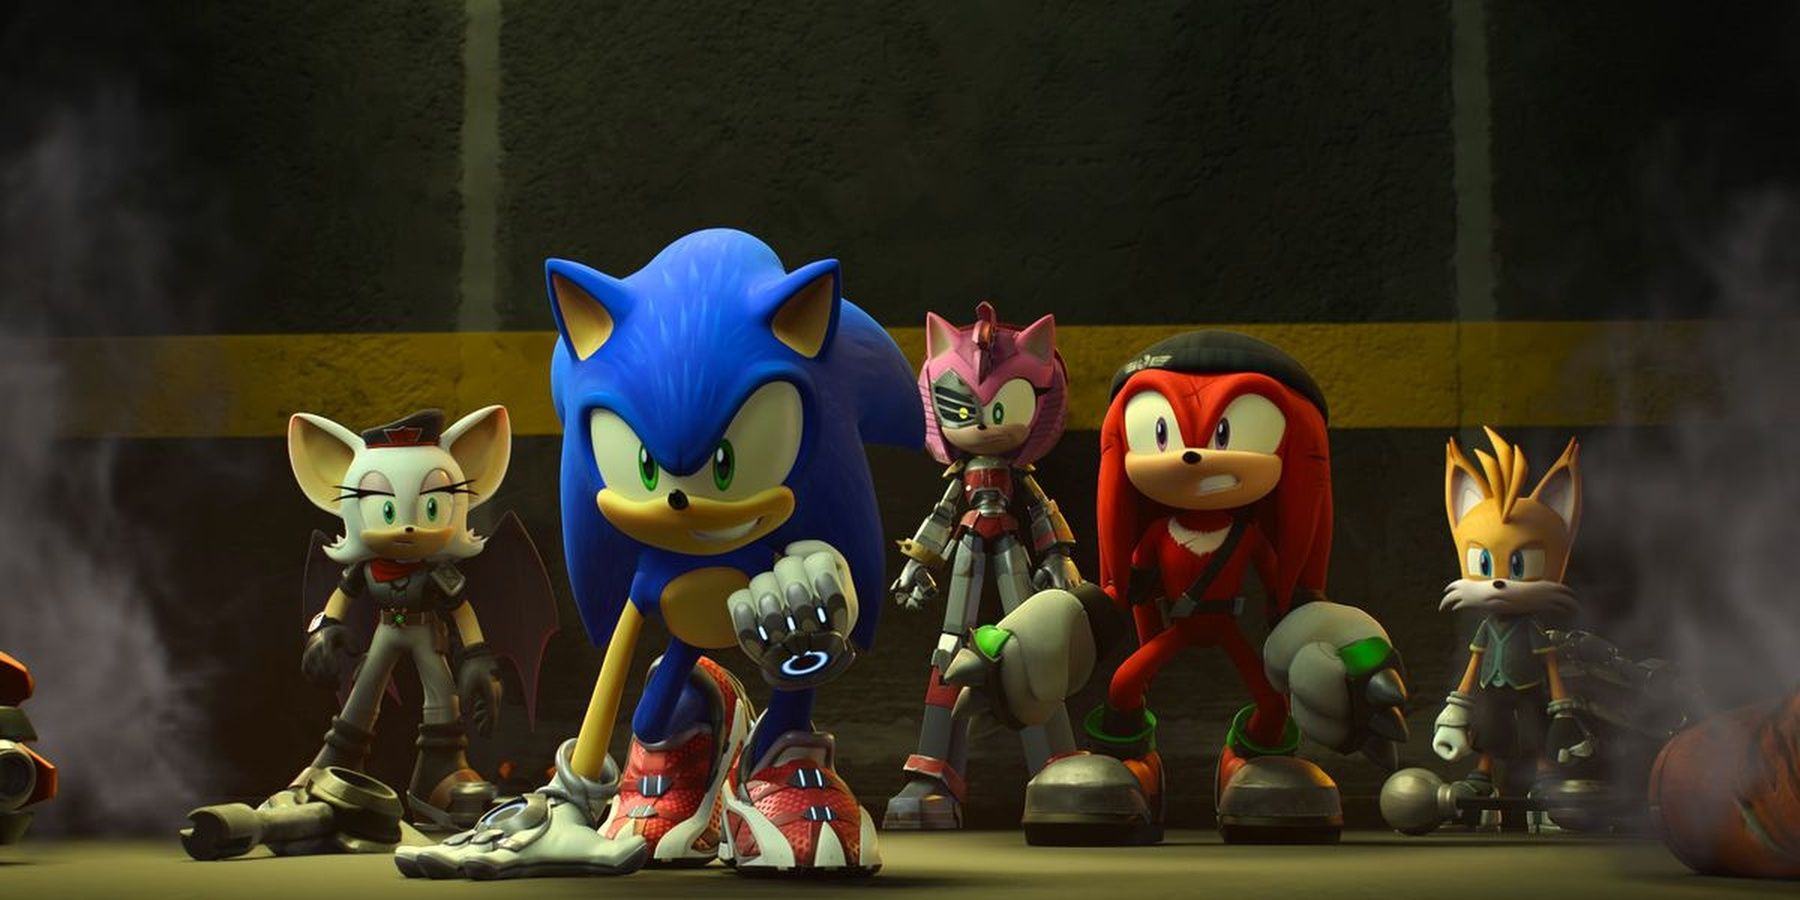 Sonic Prime Season 3 NEW TRAILER REACTION! 